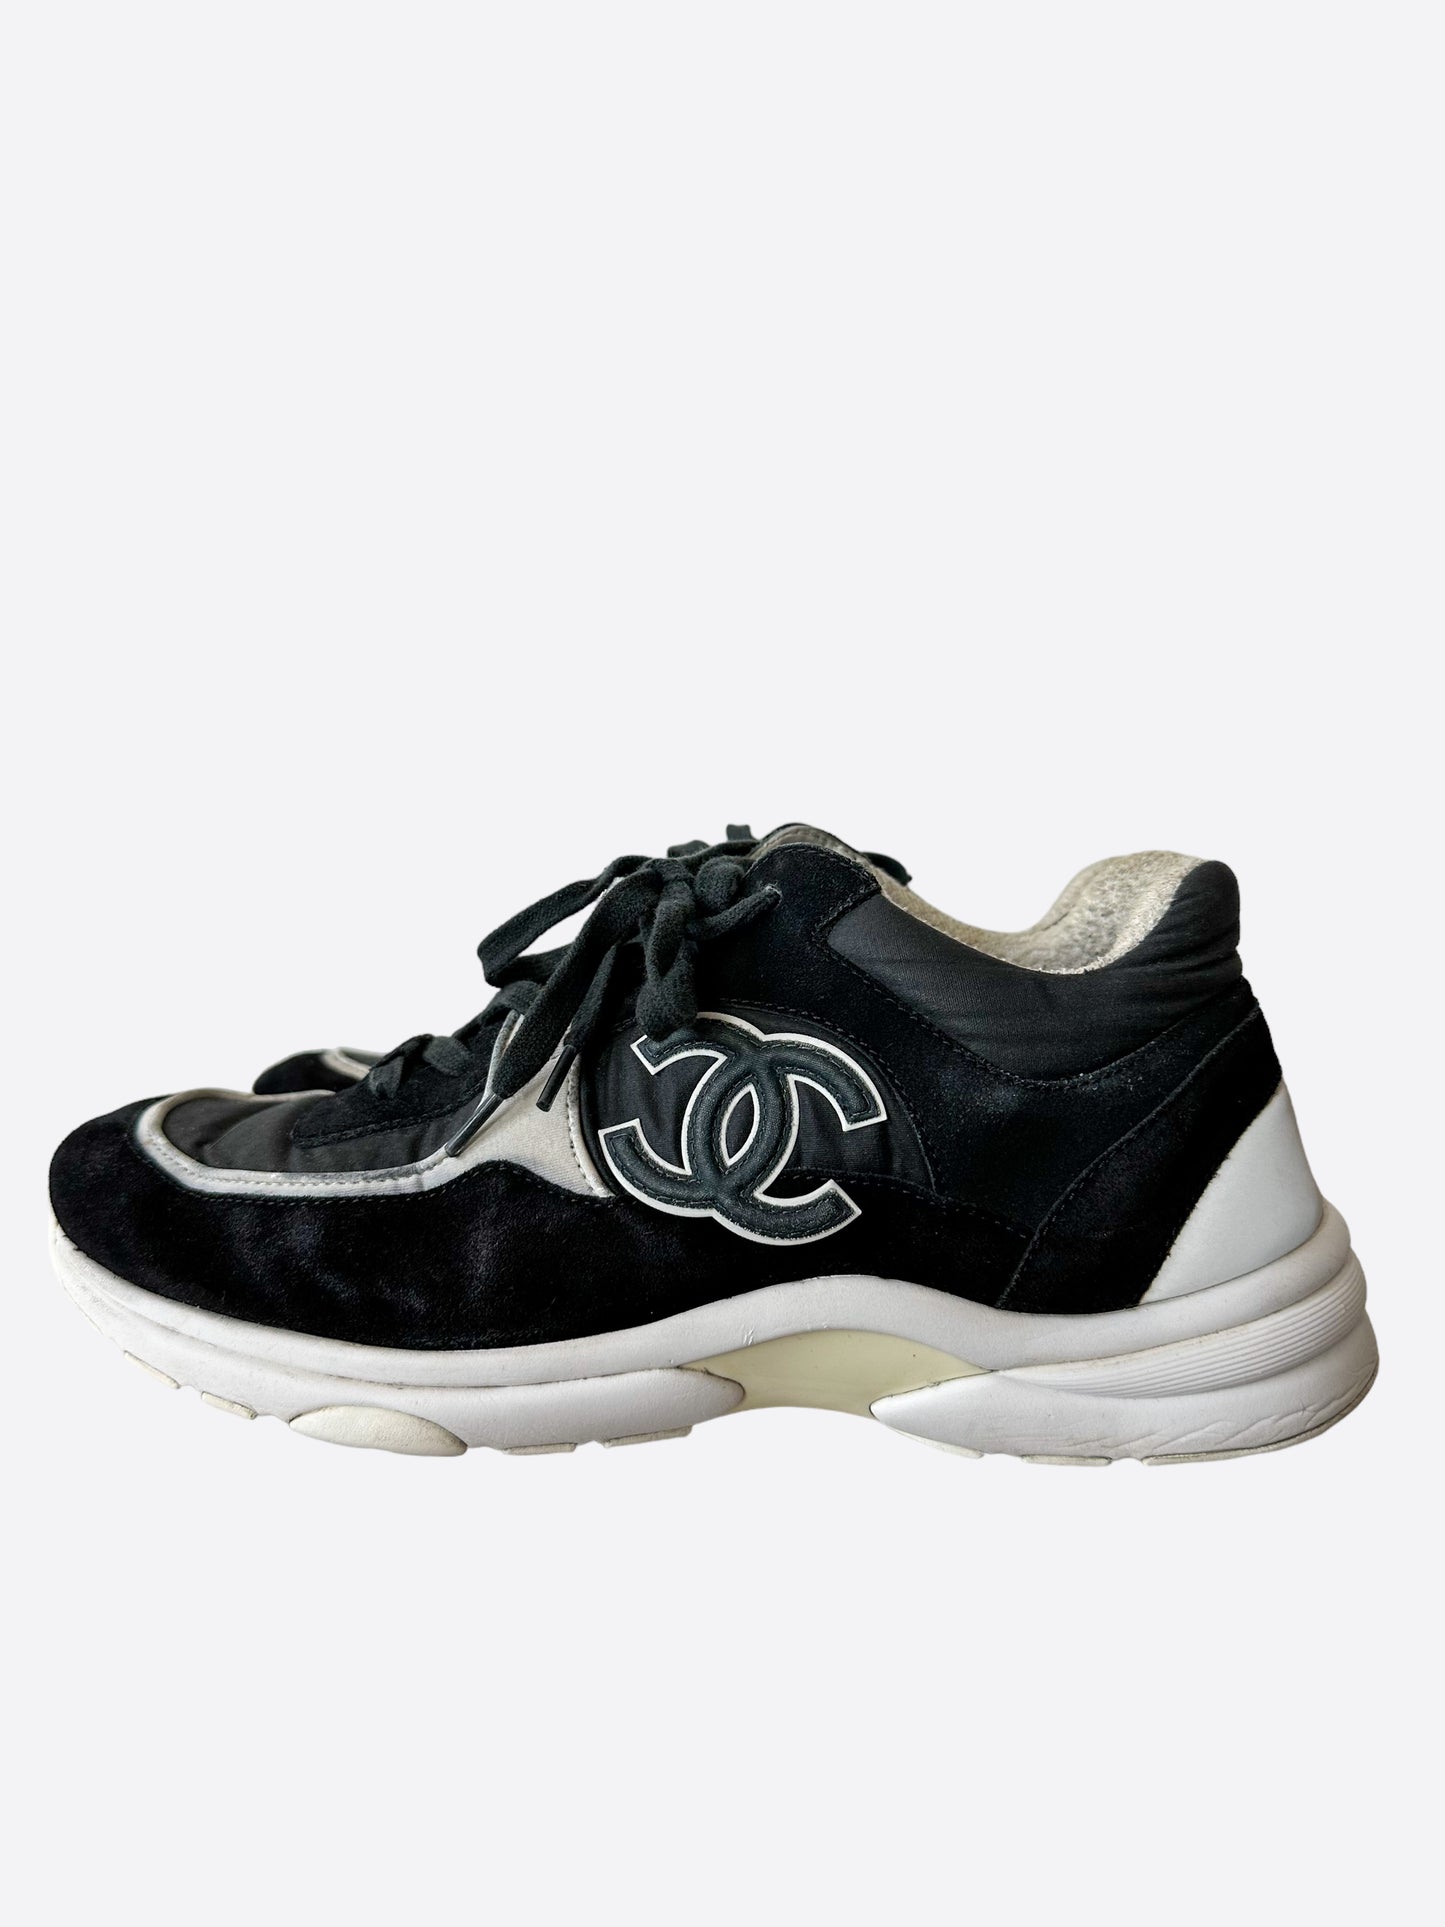 CHANEL, Shoes, Chanel Black White 5s G25313 Lace Up Lambskin Patent  Calfskin Eu Size 365